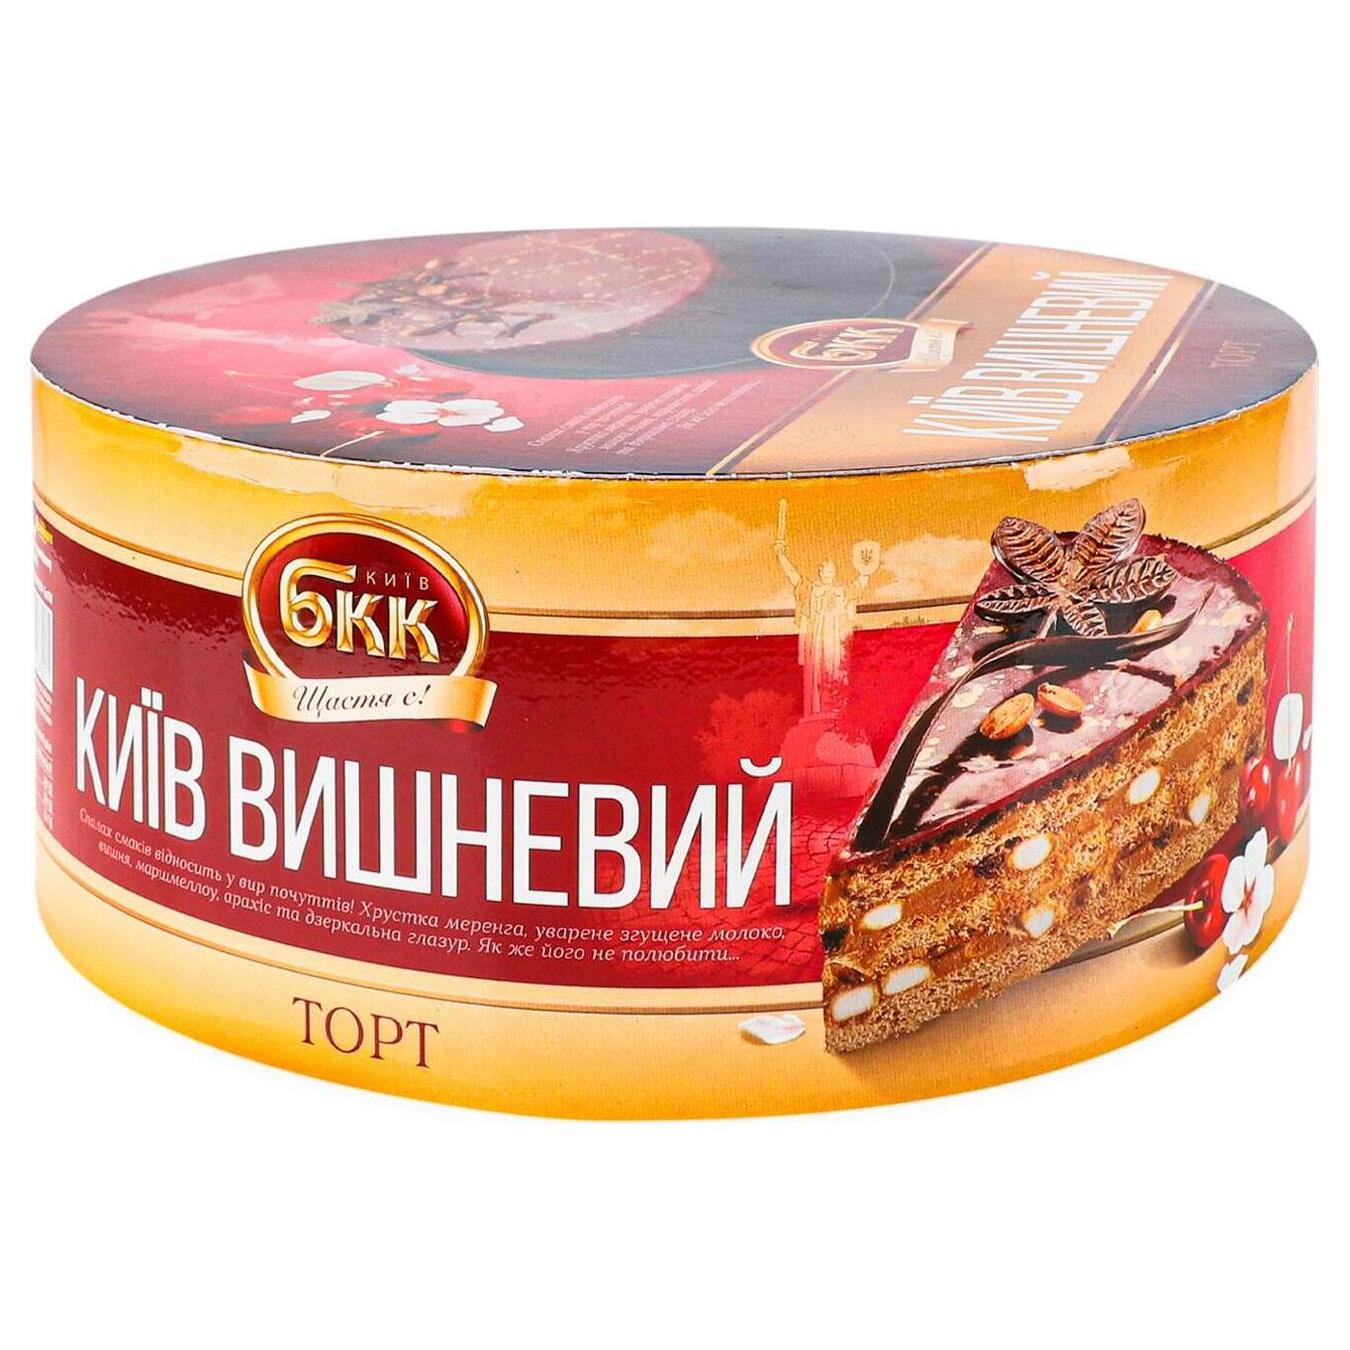 Торт БКК Киев вишневый 450г